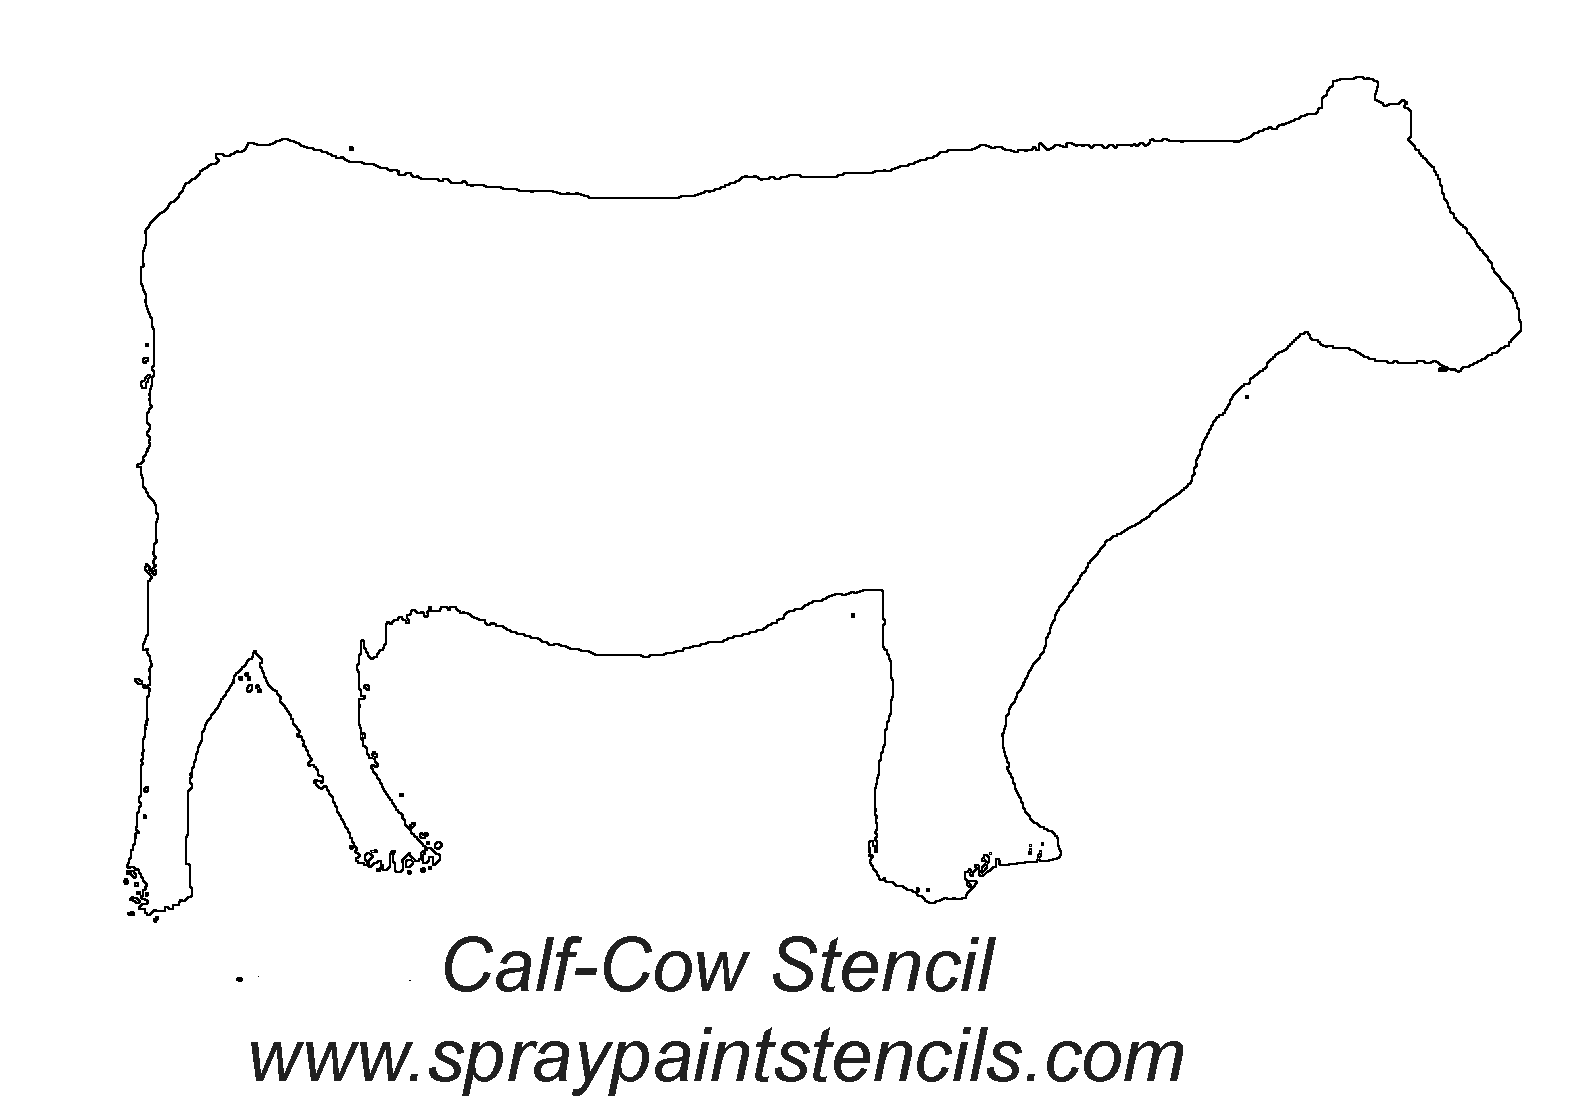 tennidipn: Cow Outline Printable